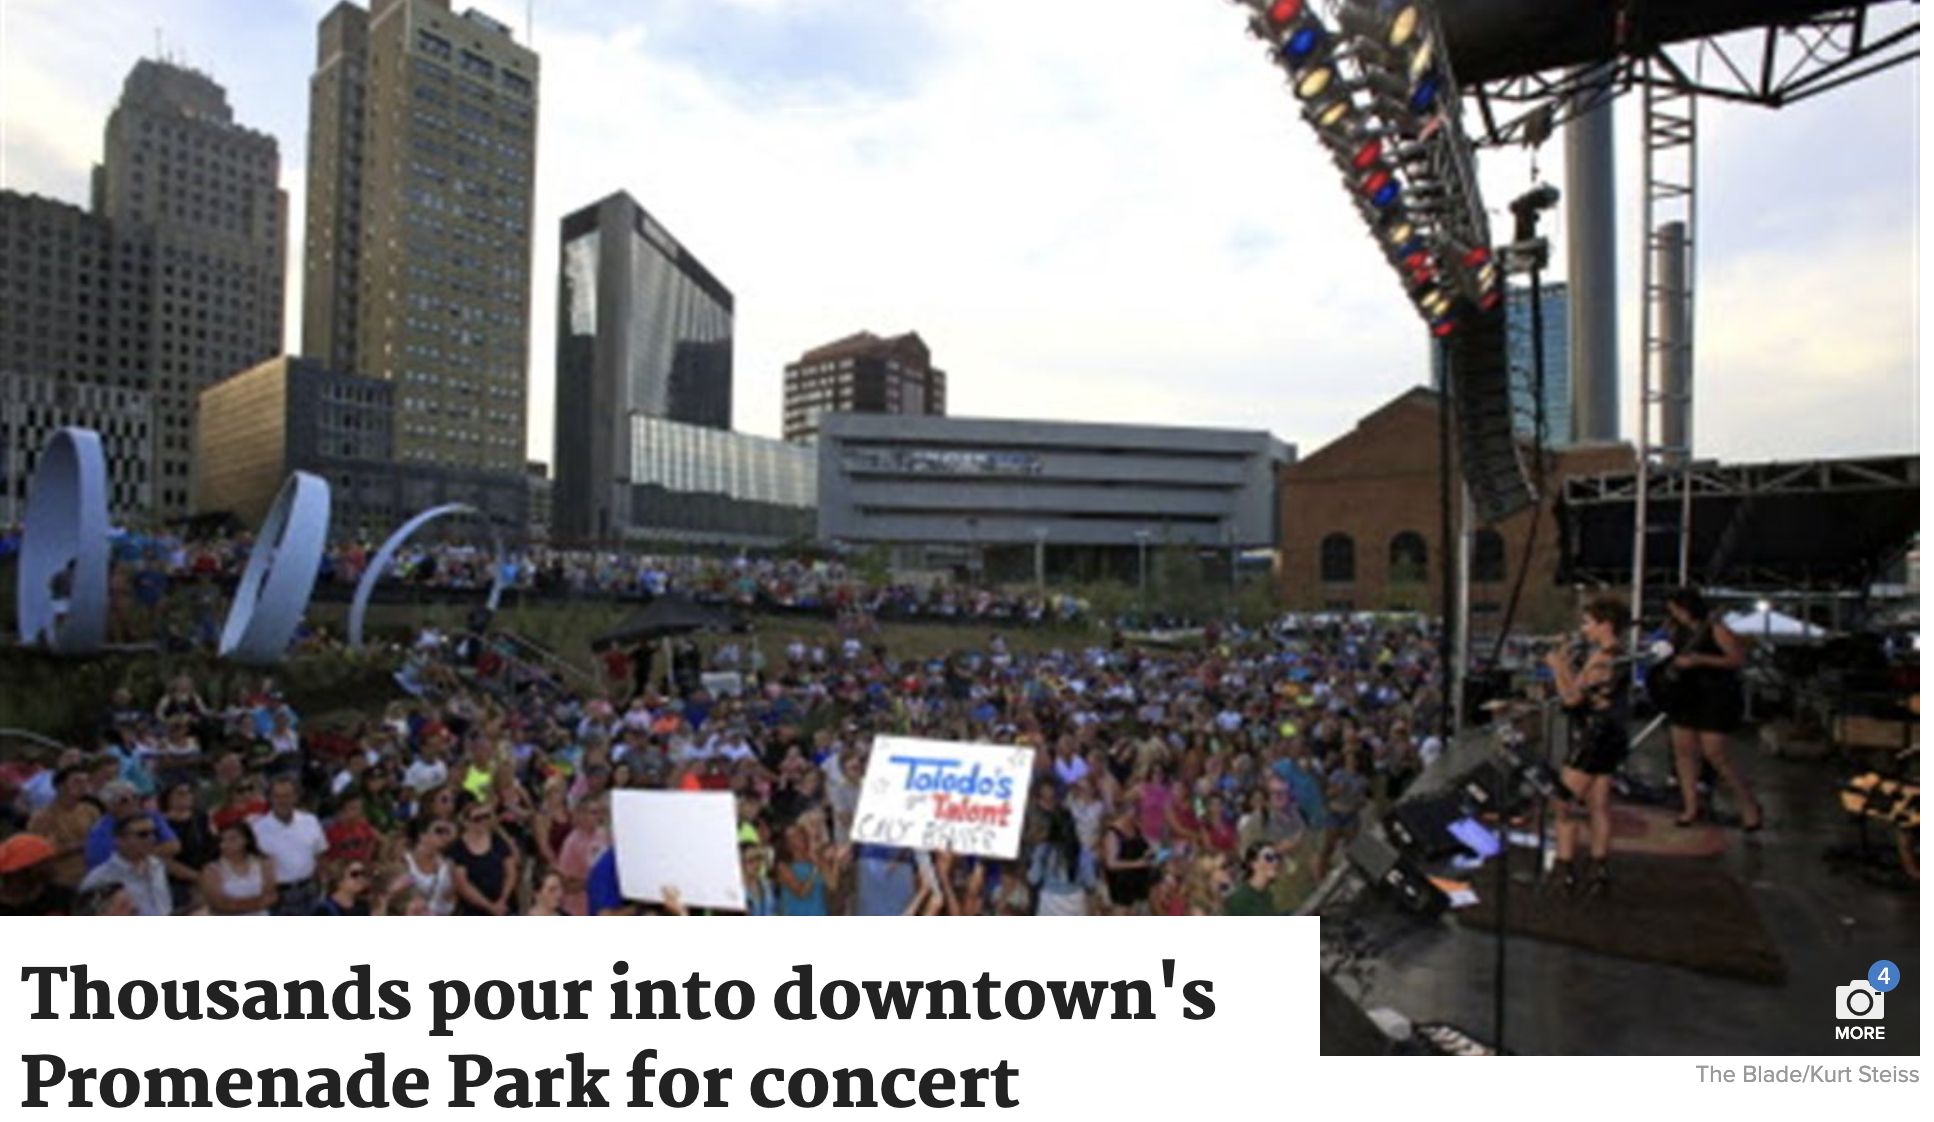 Toledo Blade – Thousands pour into downtown’s Promenade Park for concert (July 22, 2017)